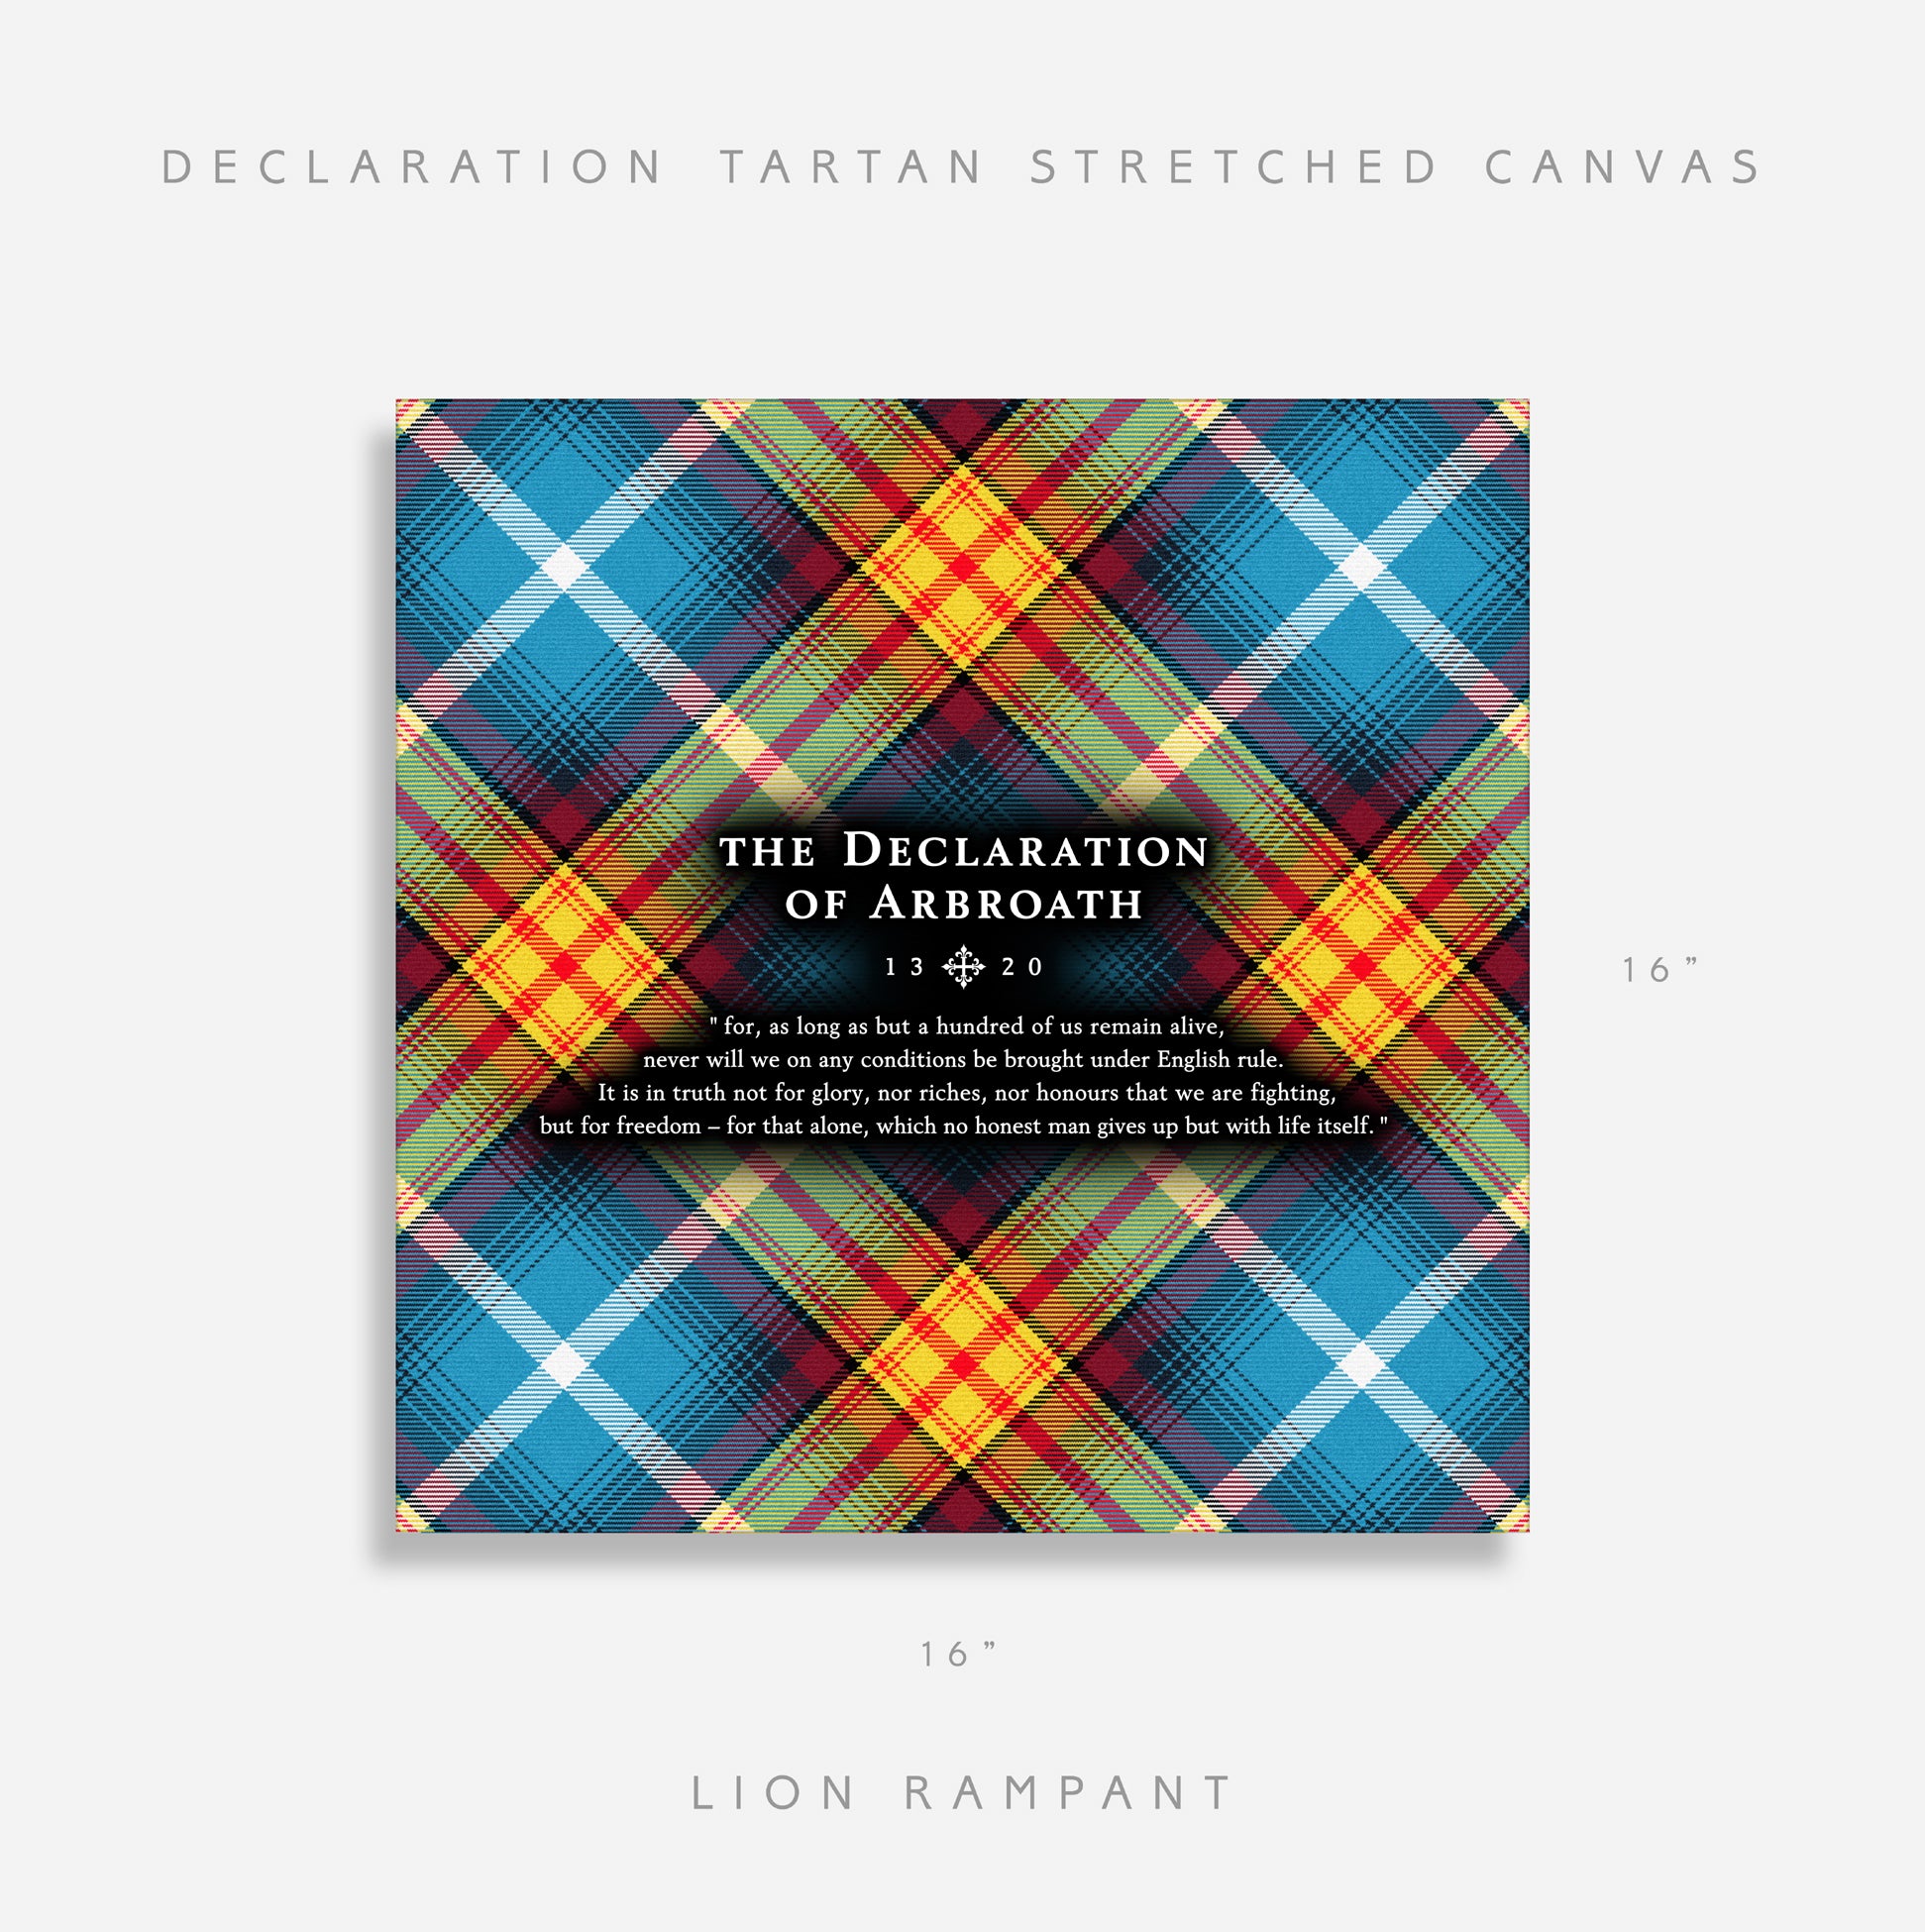 Lion Rampant - Declaration Tartan 16" Stretched Canvas